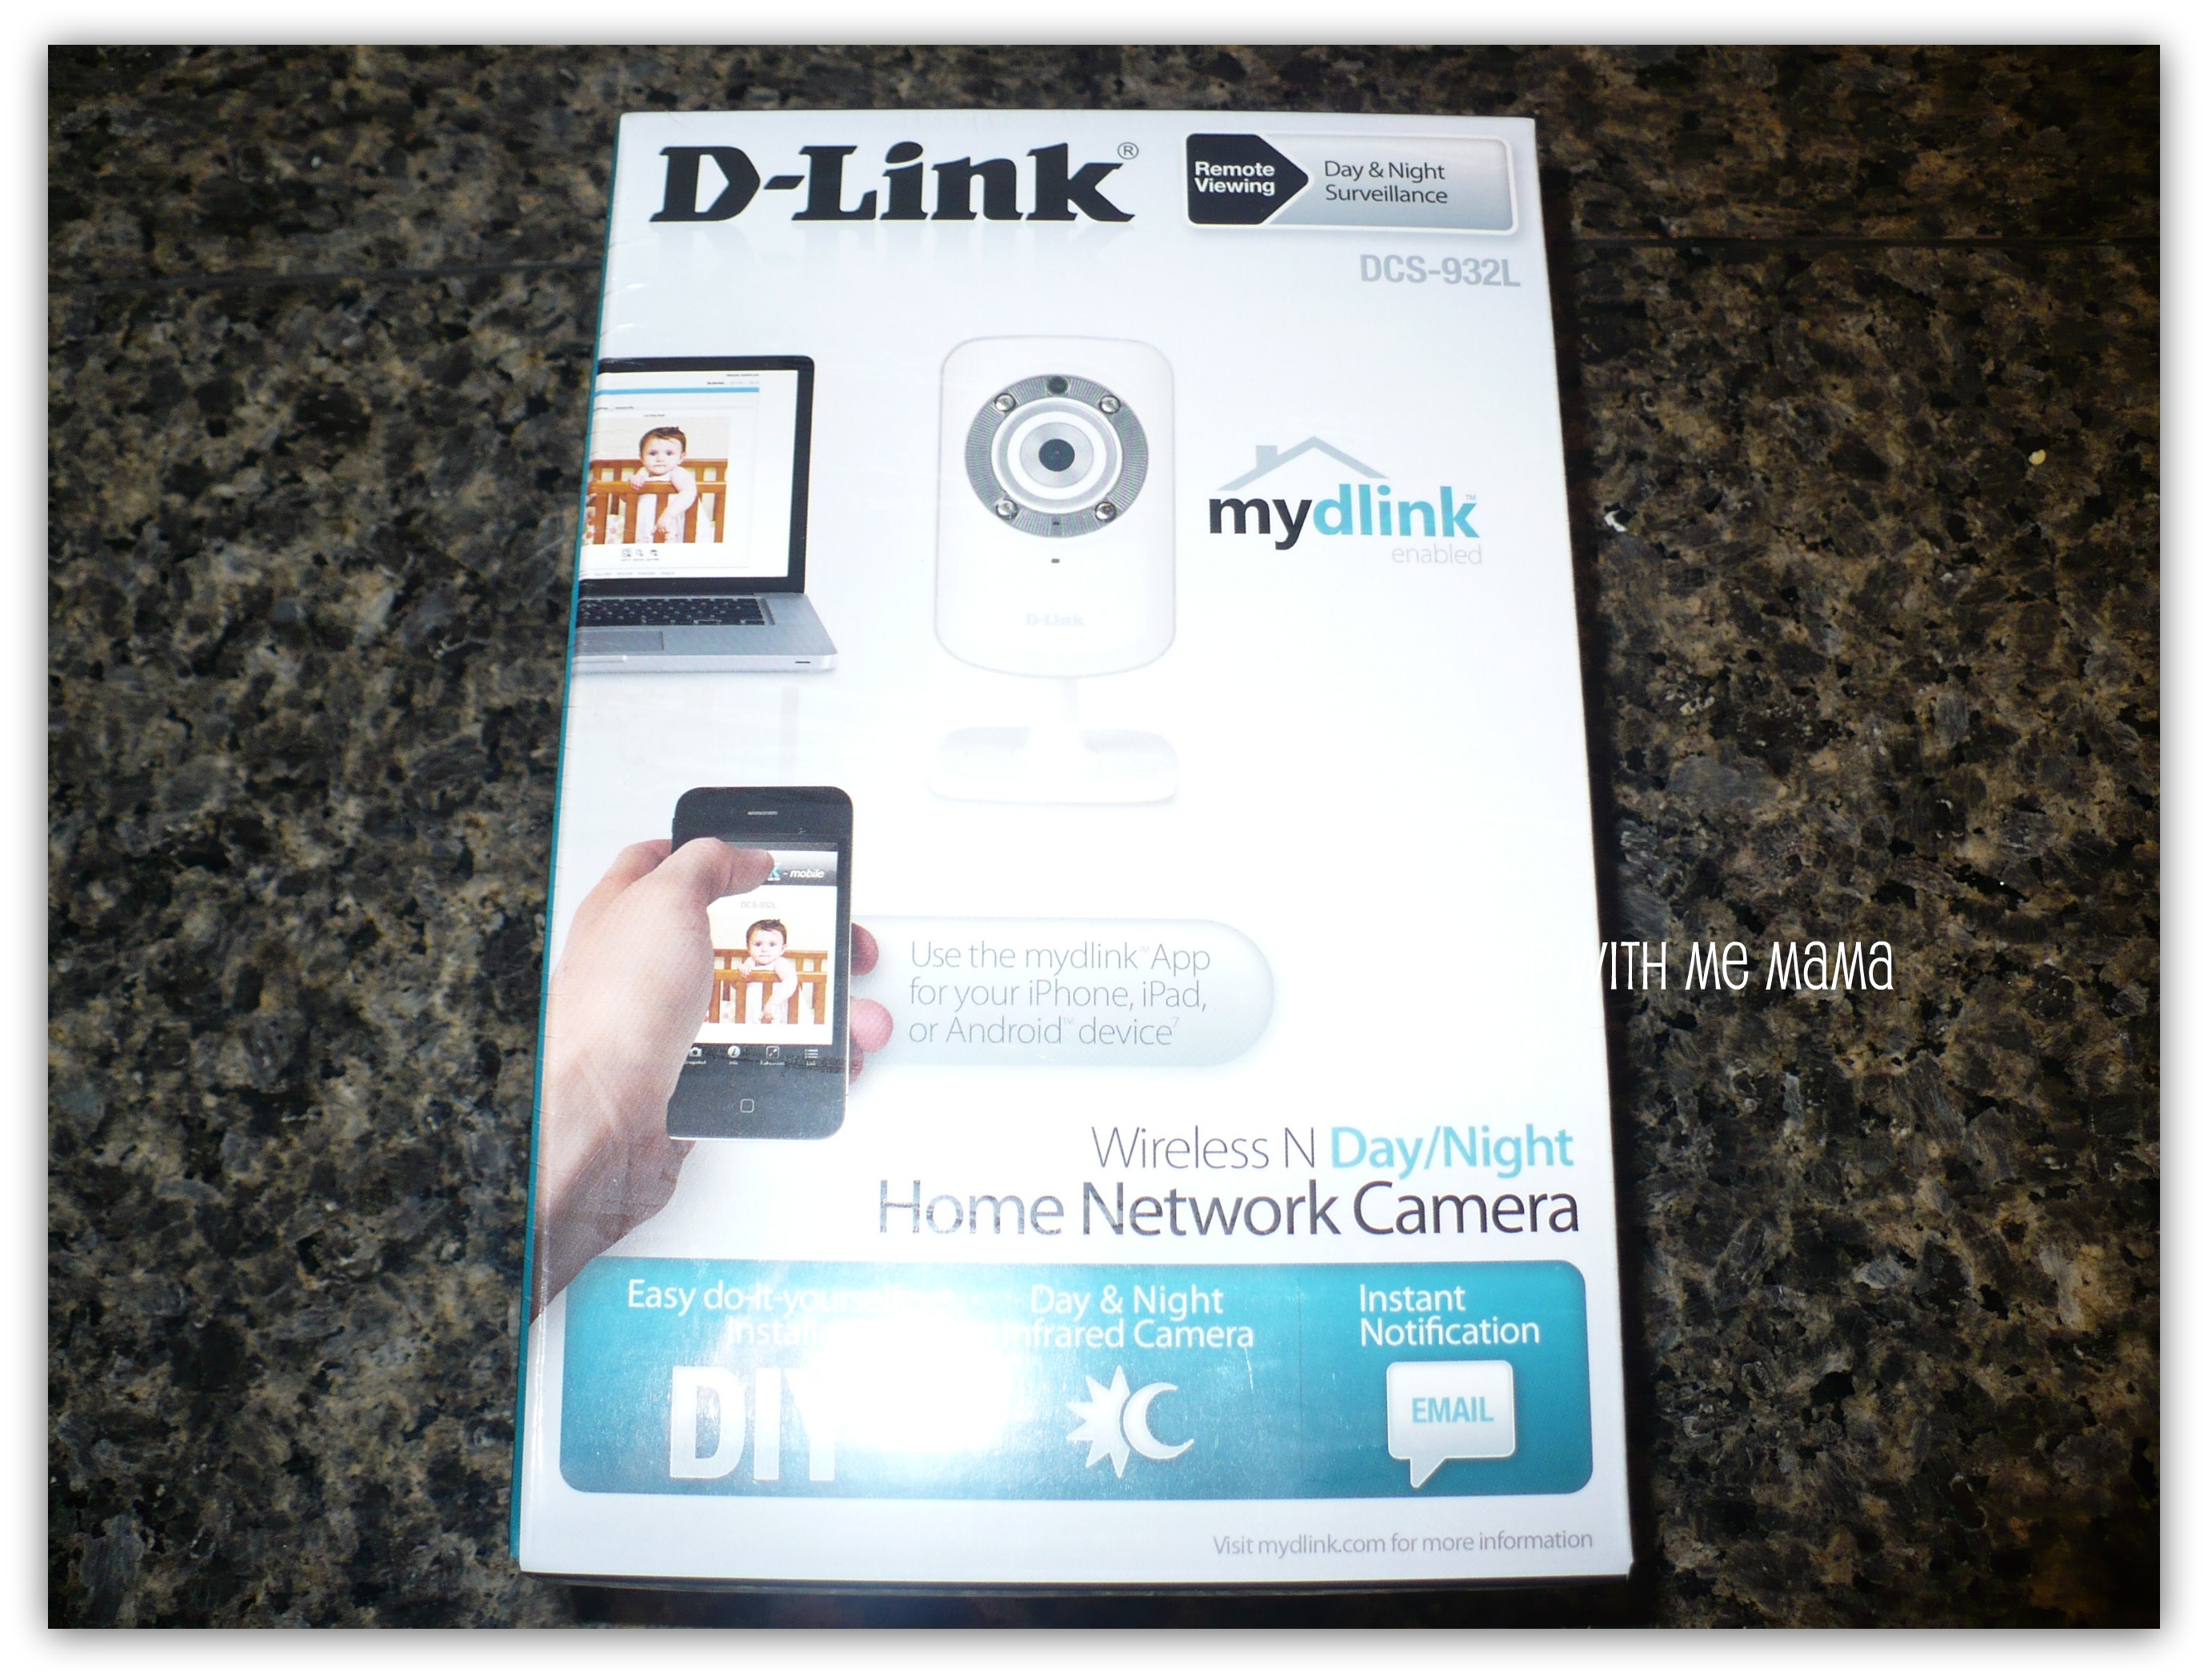 D-Link Wireless Network Camera